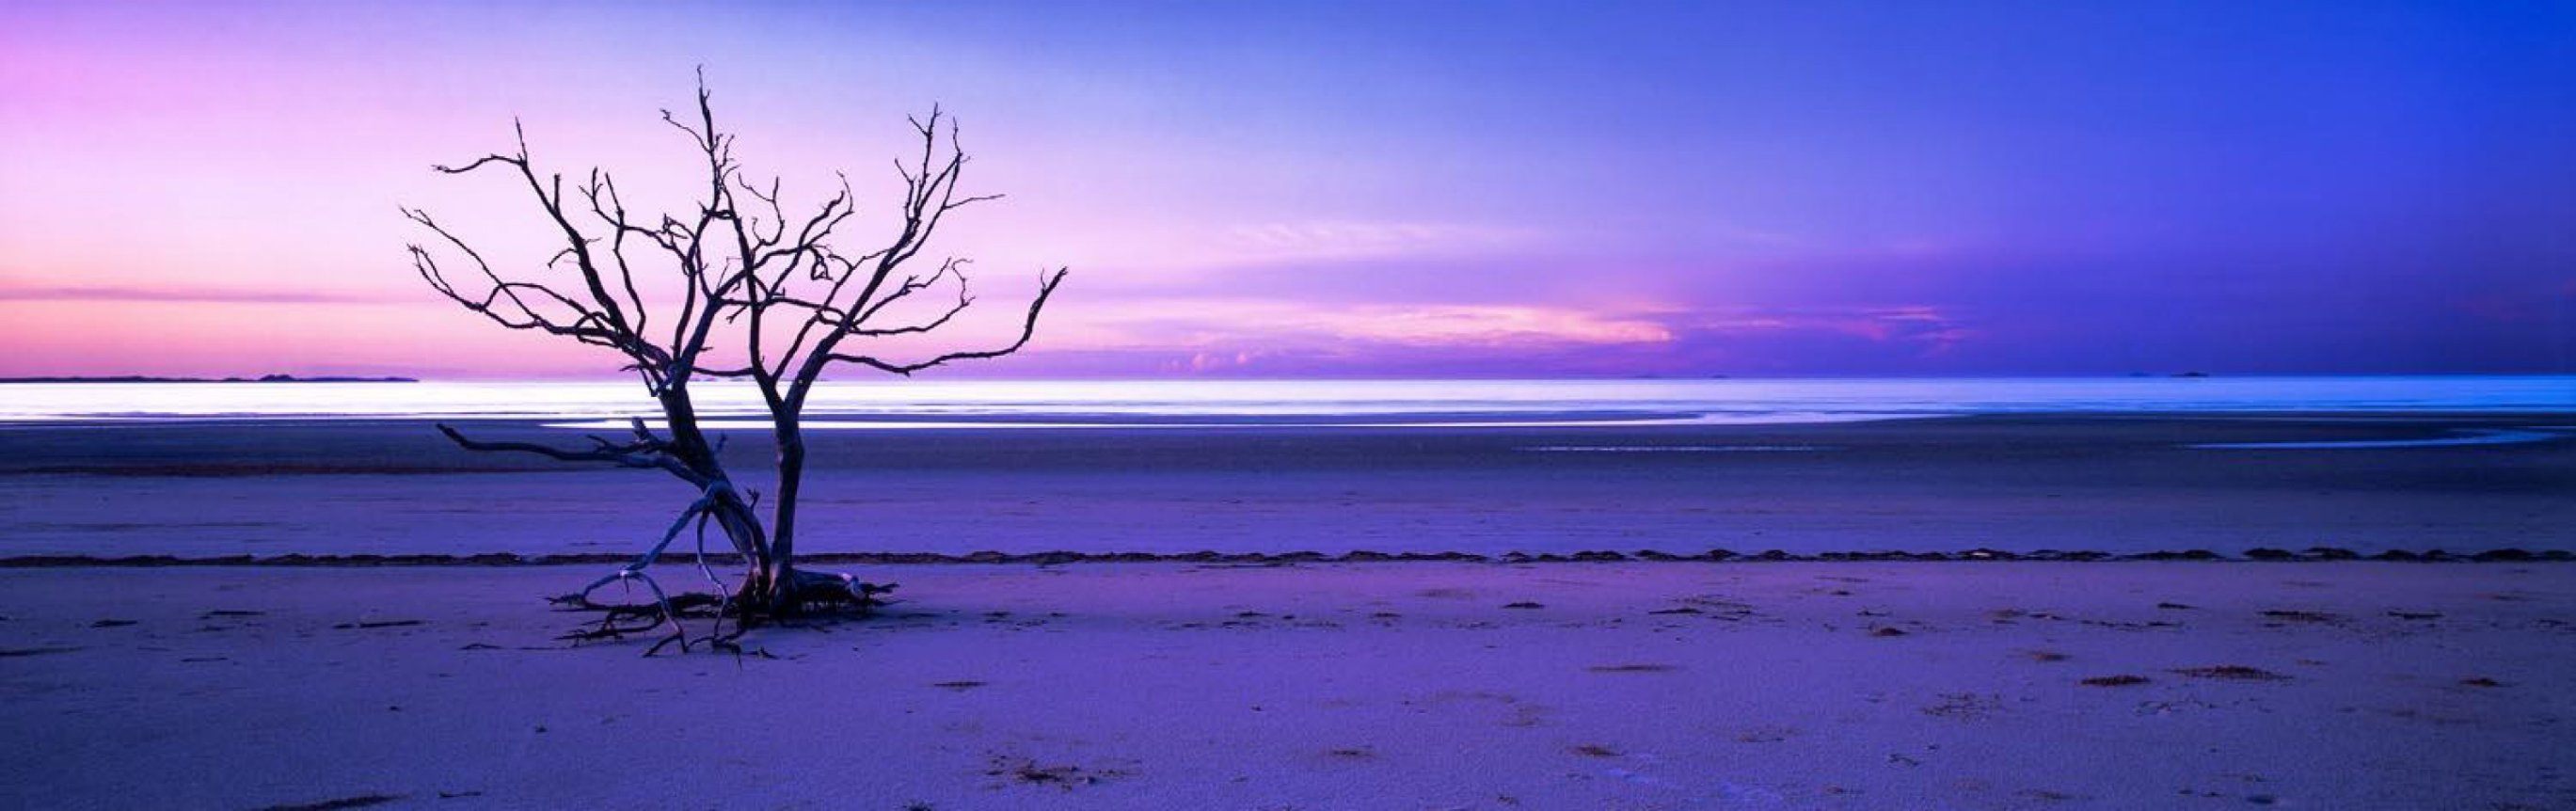 Solitude  (Cape York, Queensland) Panorama by Peter Lik